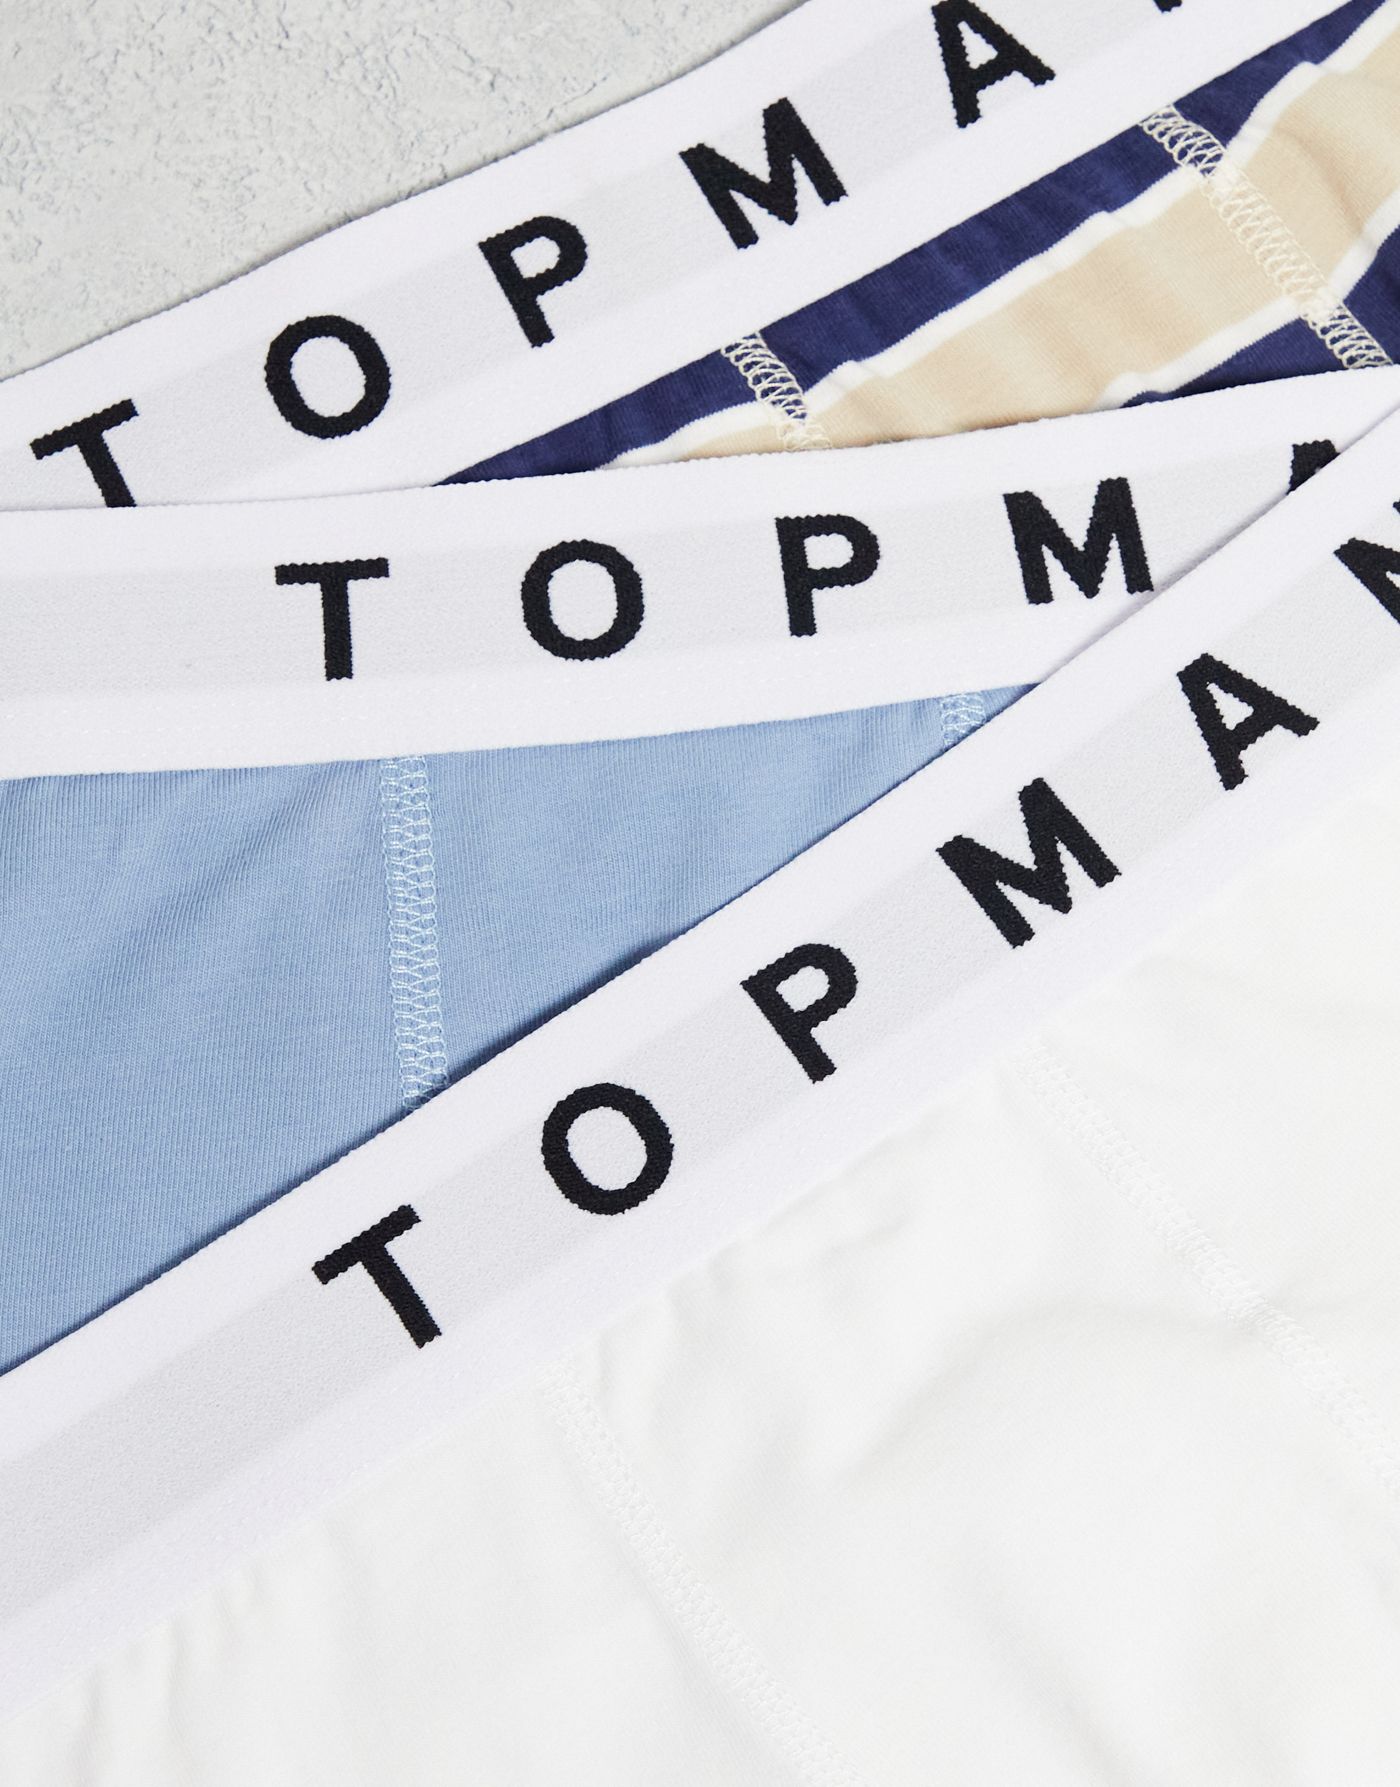 Topman 3 pack trunks in blue, white and navy stripe